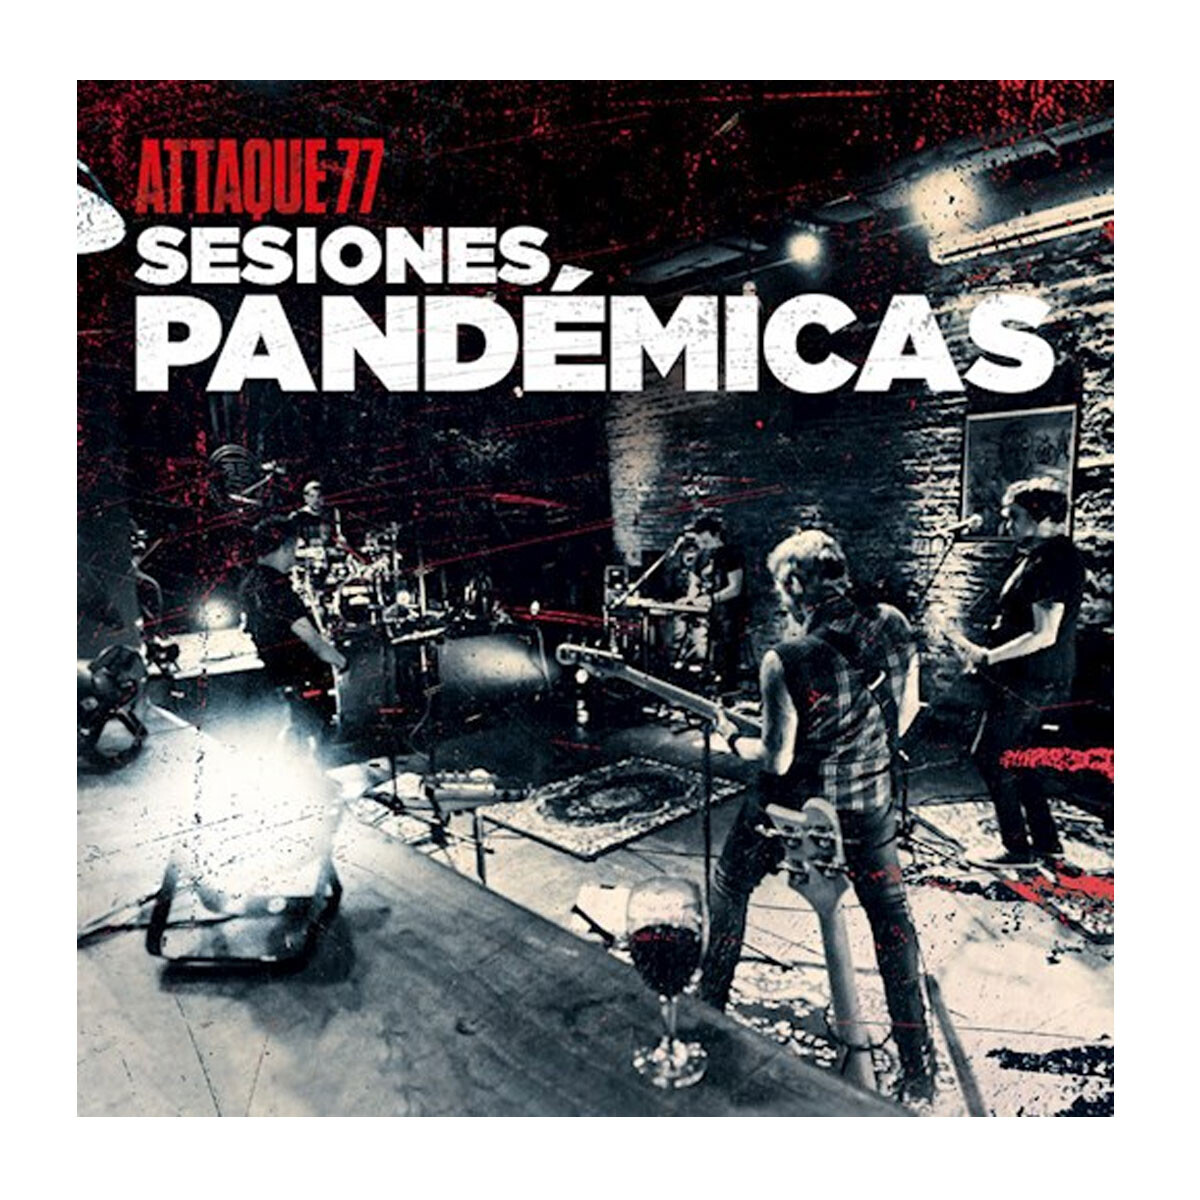 Attaque 77 - Sesiones Pandemicas - Vinilo 